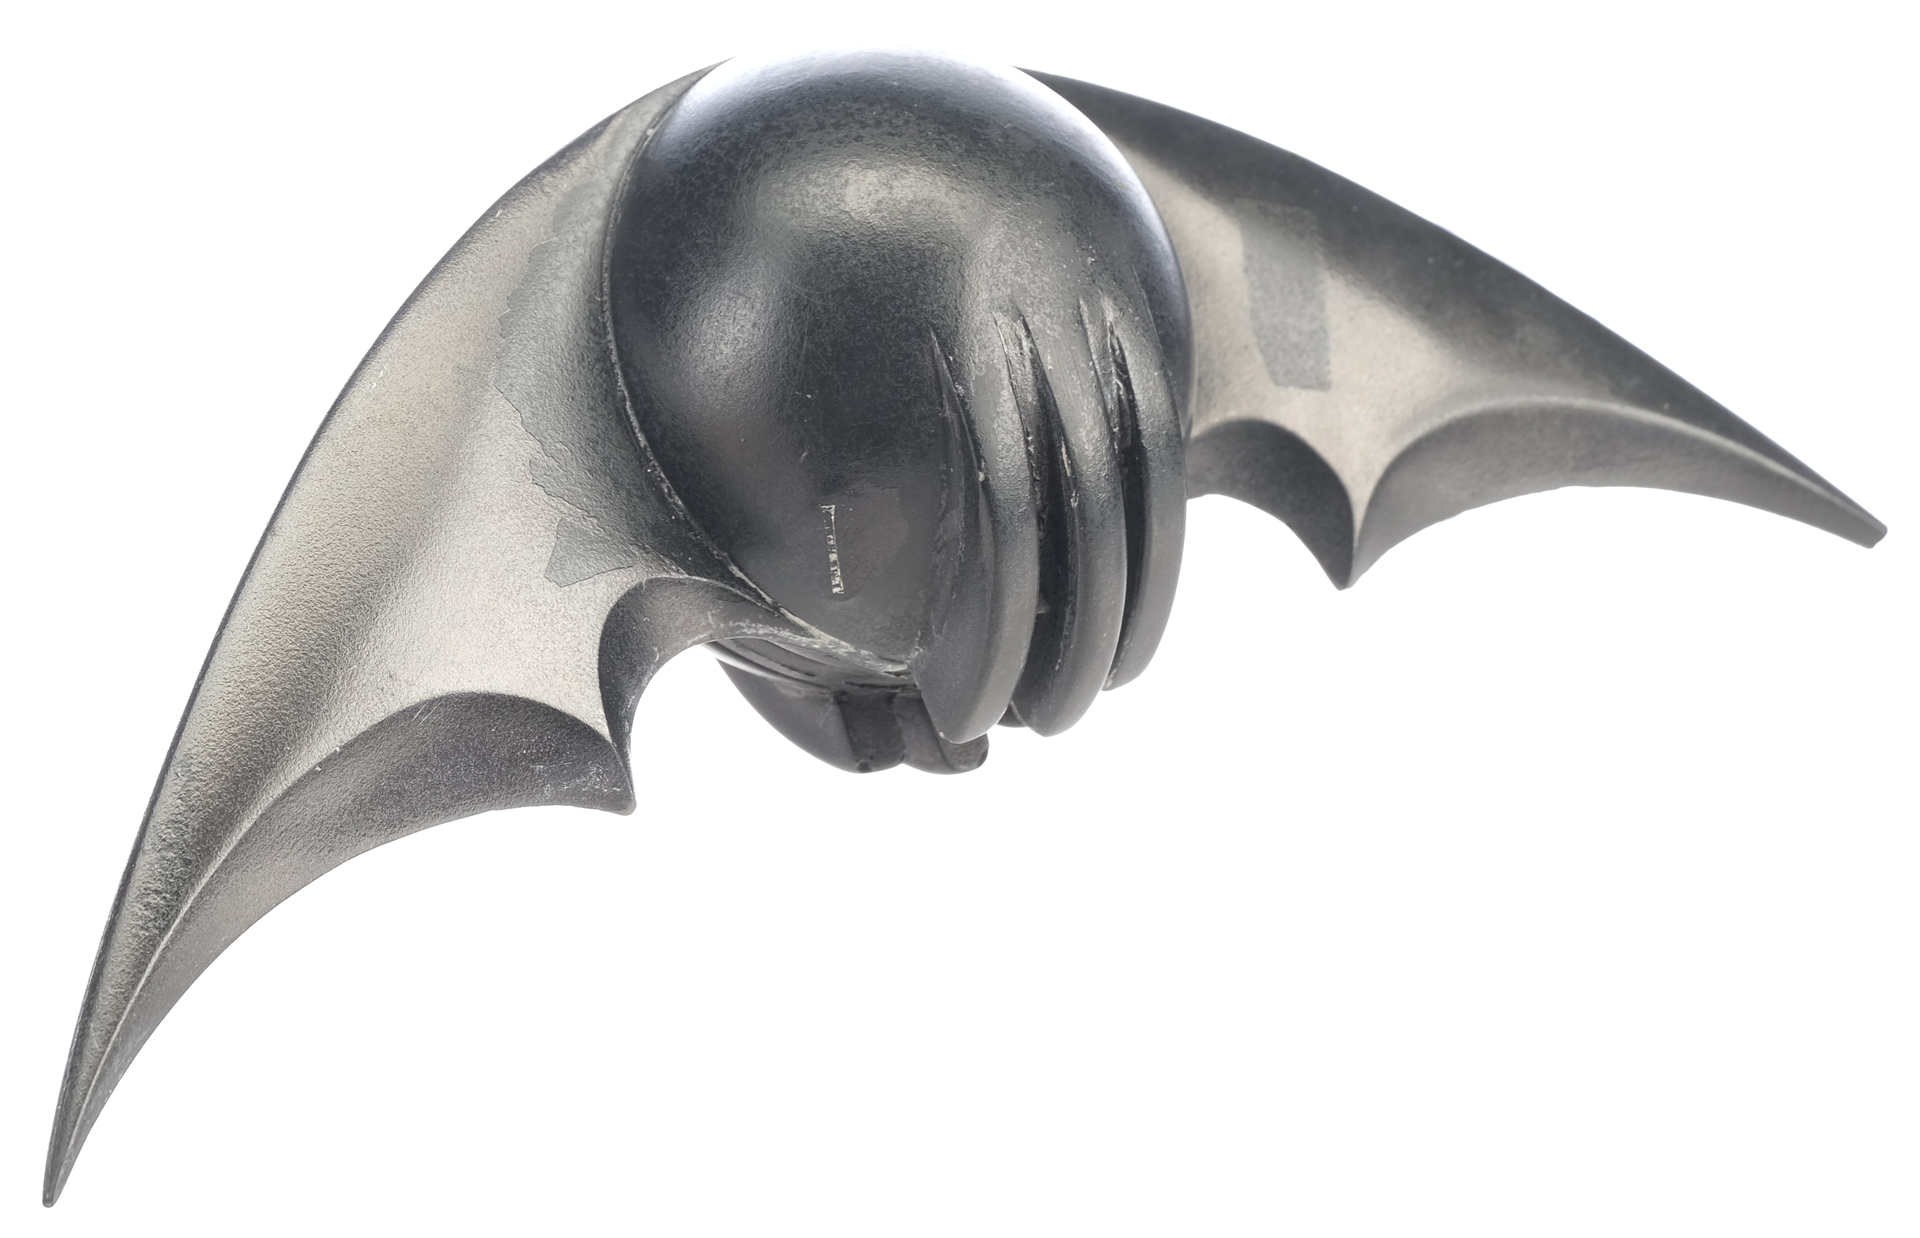 BATMAN FOREVER - Batman's (Val Kilmer) Bat Bola - Image 4 of 11